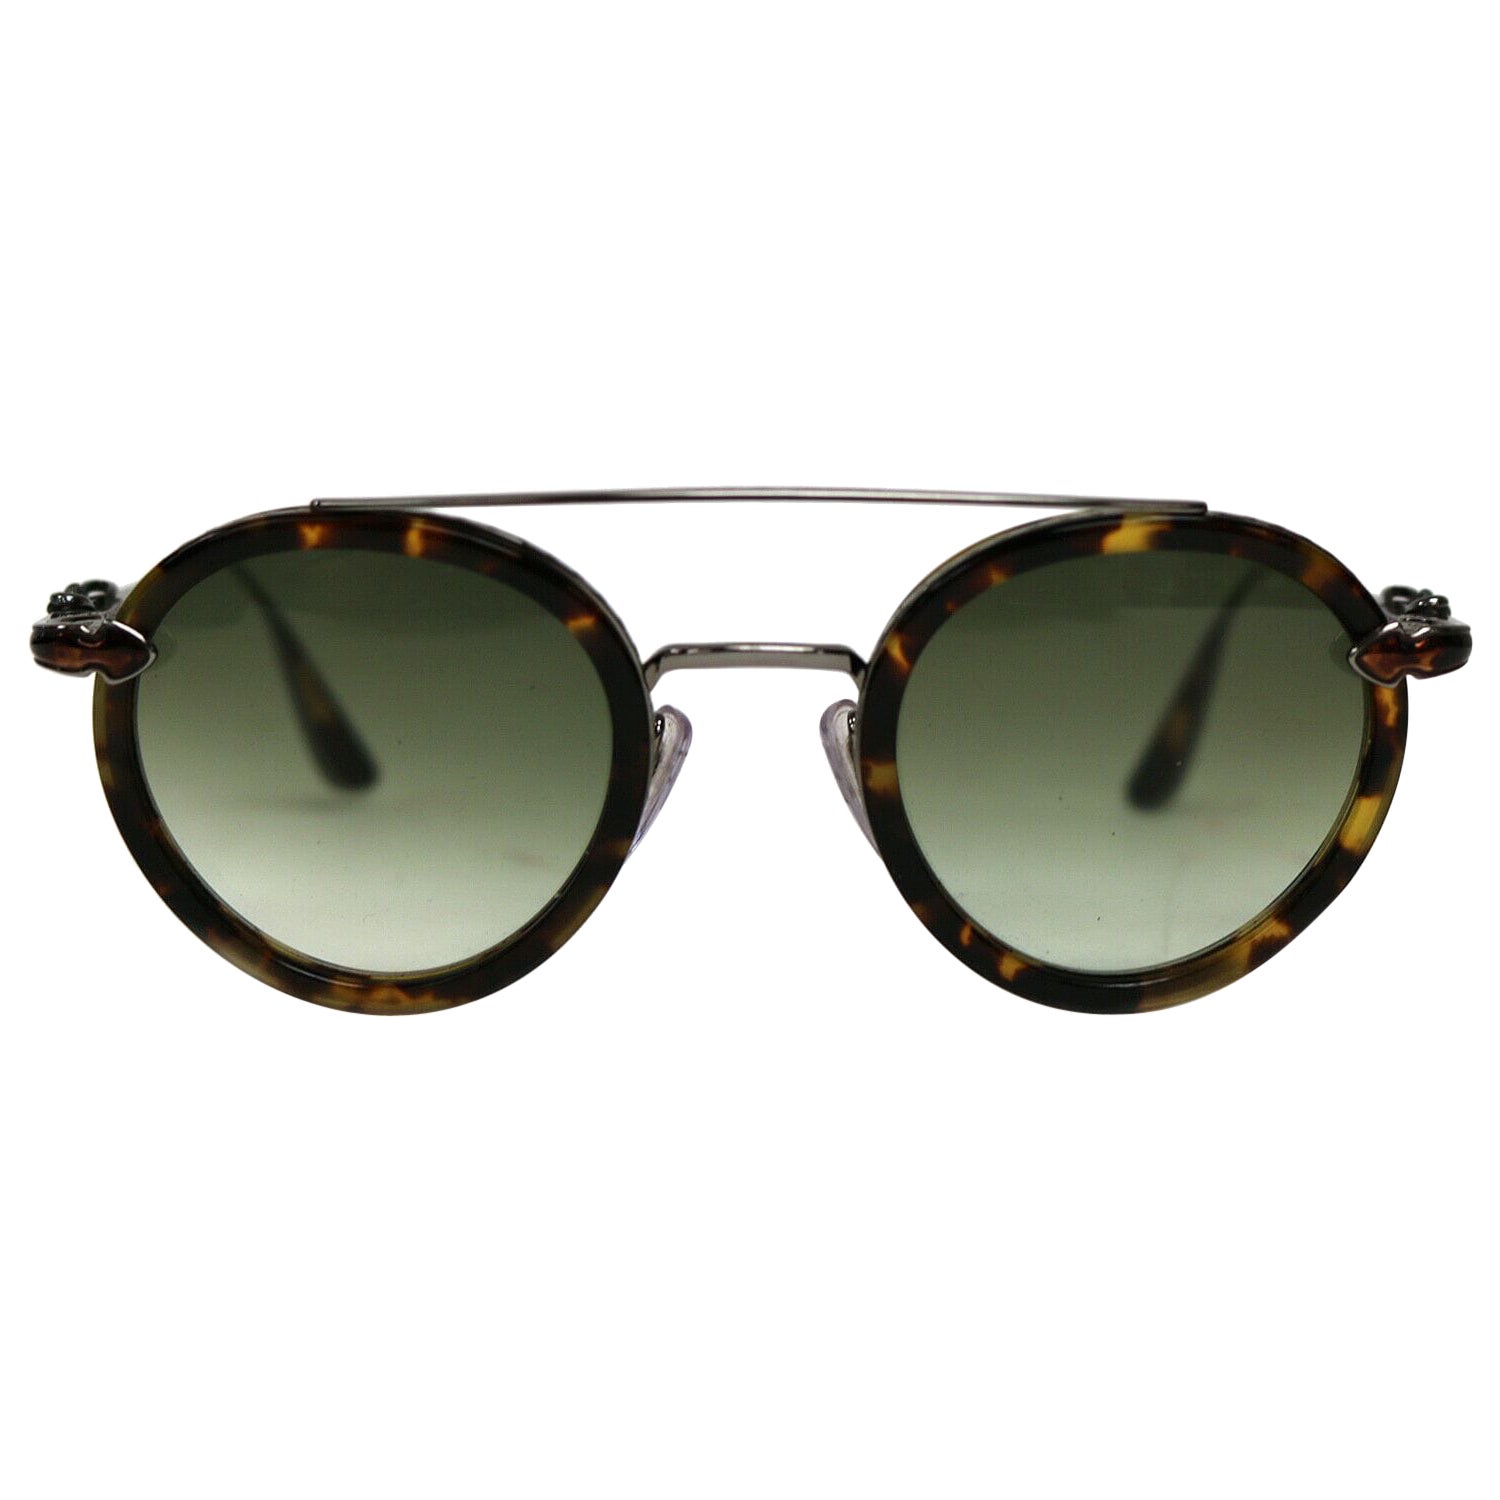 Chrome Hearts BoJimr II Tortoise Sunglasses with Case For Sale